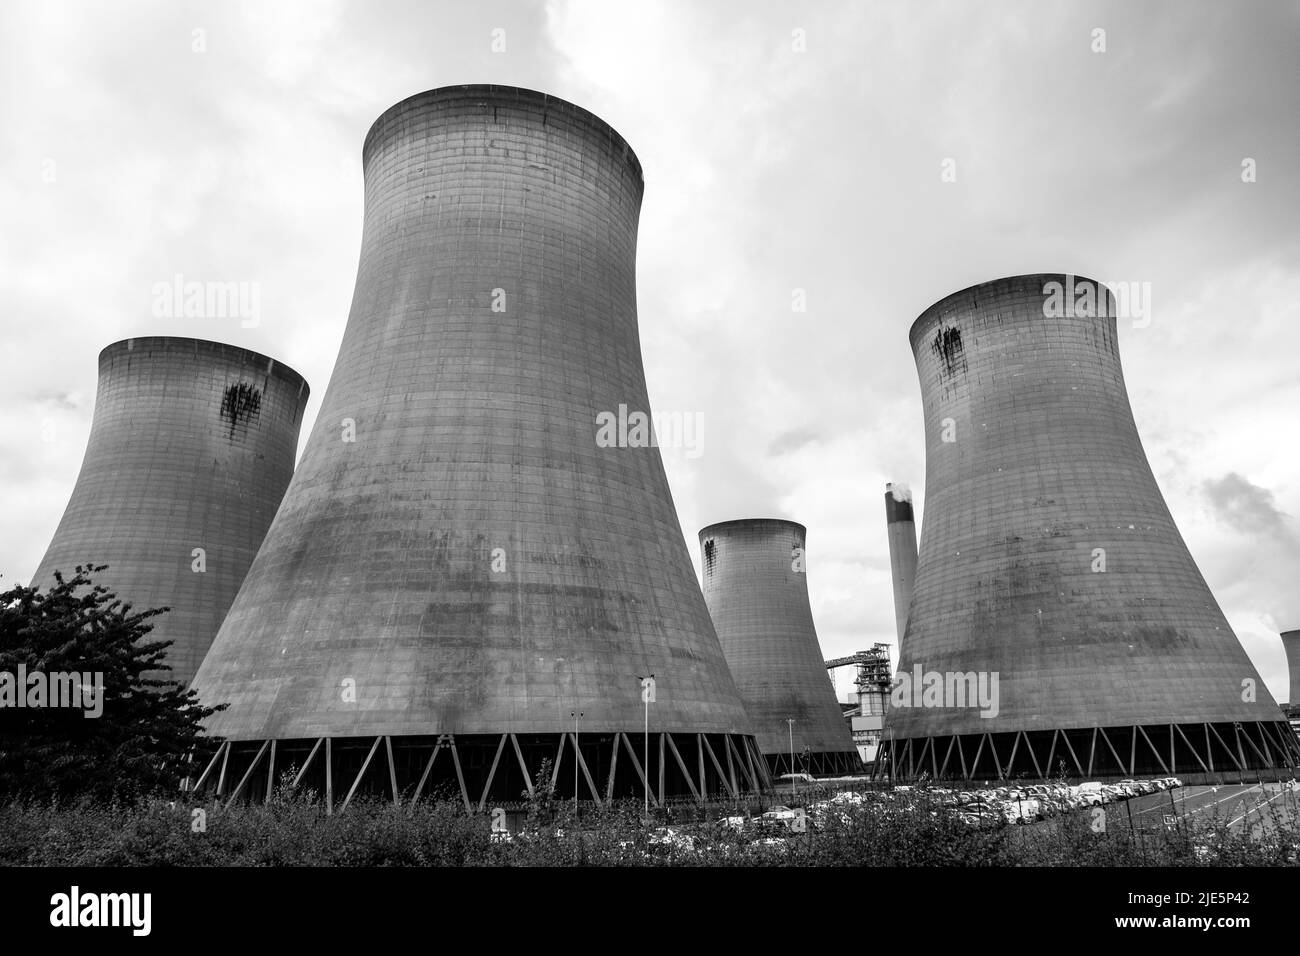 Drax Cooling Towers, centrale électrique Drax, noir et blanc, centrale électrique dans le North Yorkshire, Angleterre, Royaume-Uni. Banque D'Images